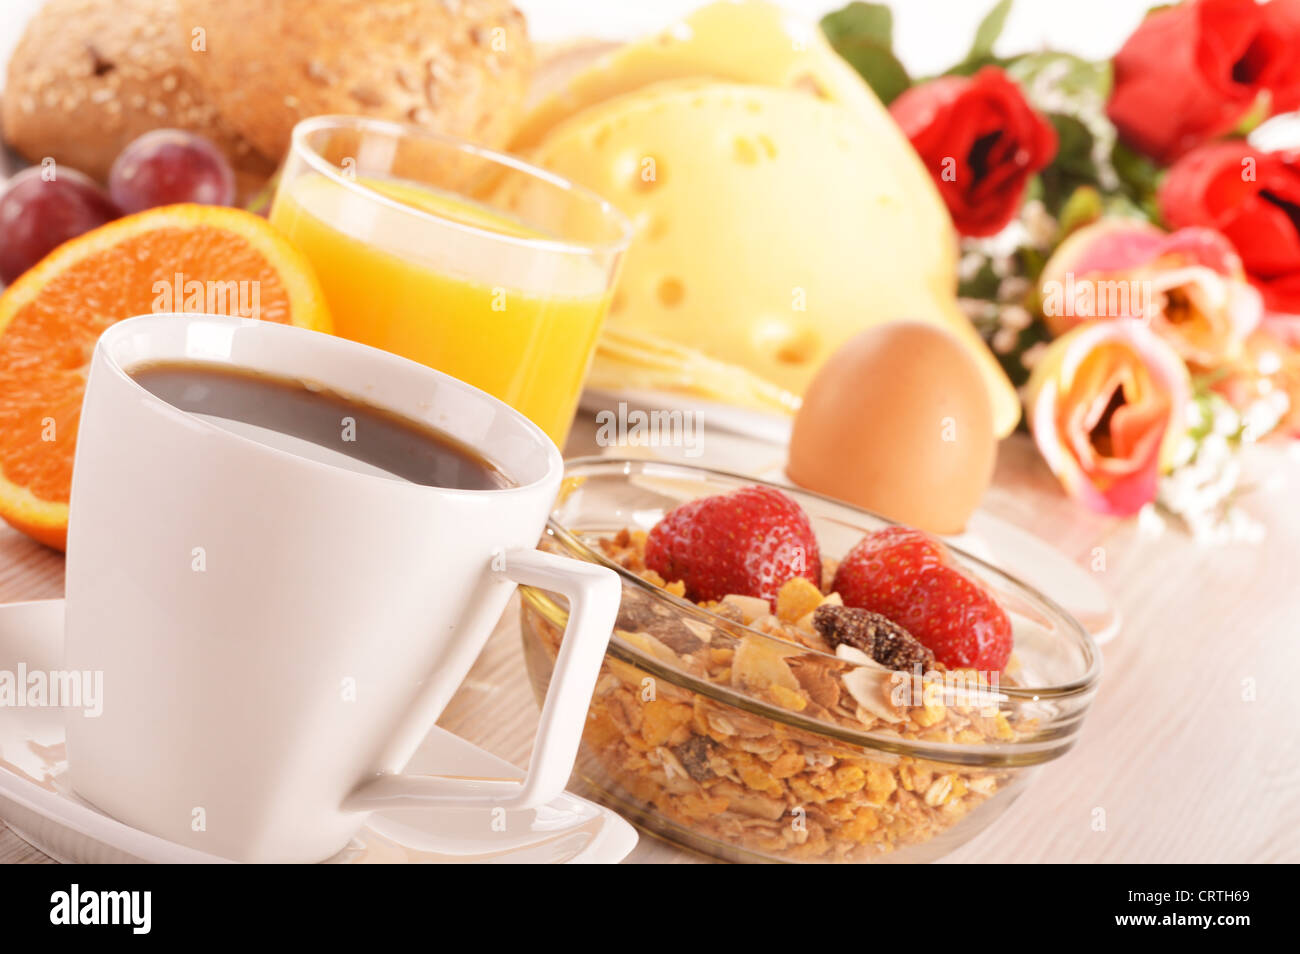 Breakfast on the table. Coffee, orange juice, rolls, muesli. Stock Photo